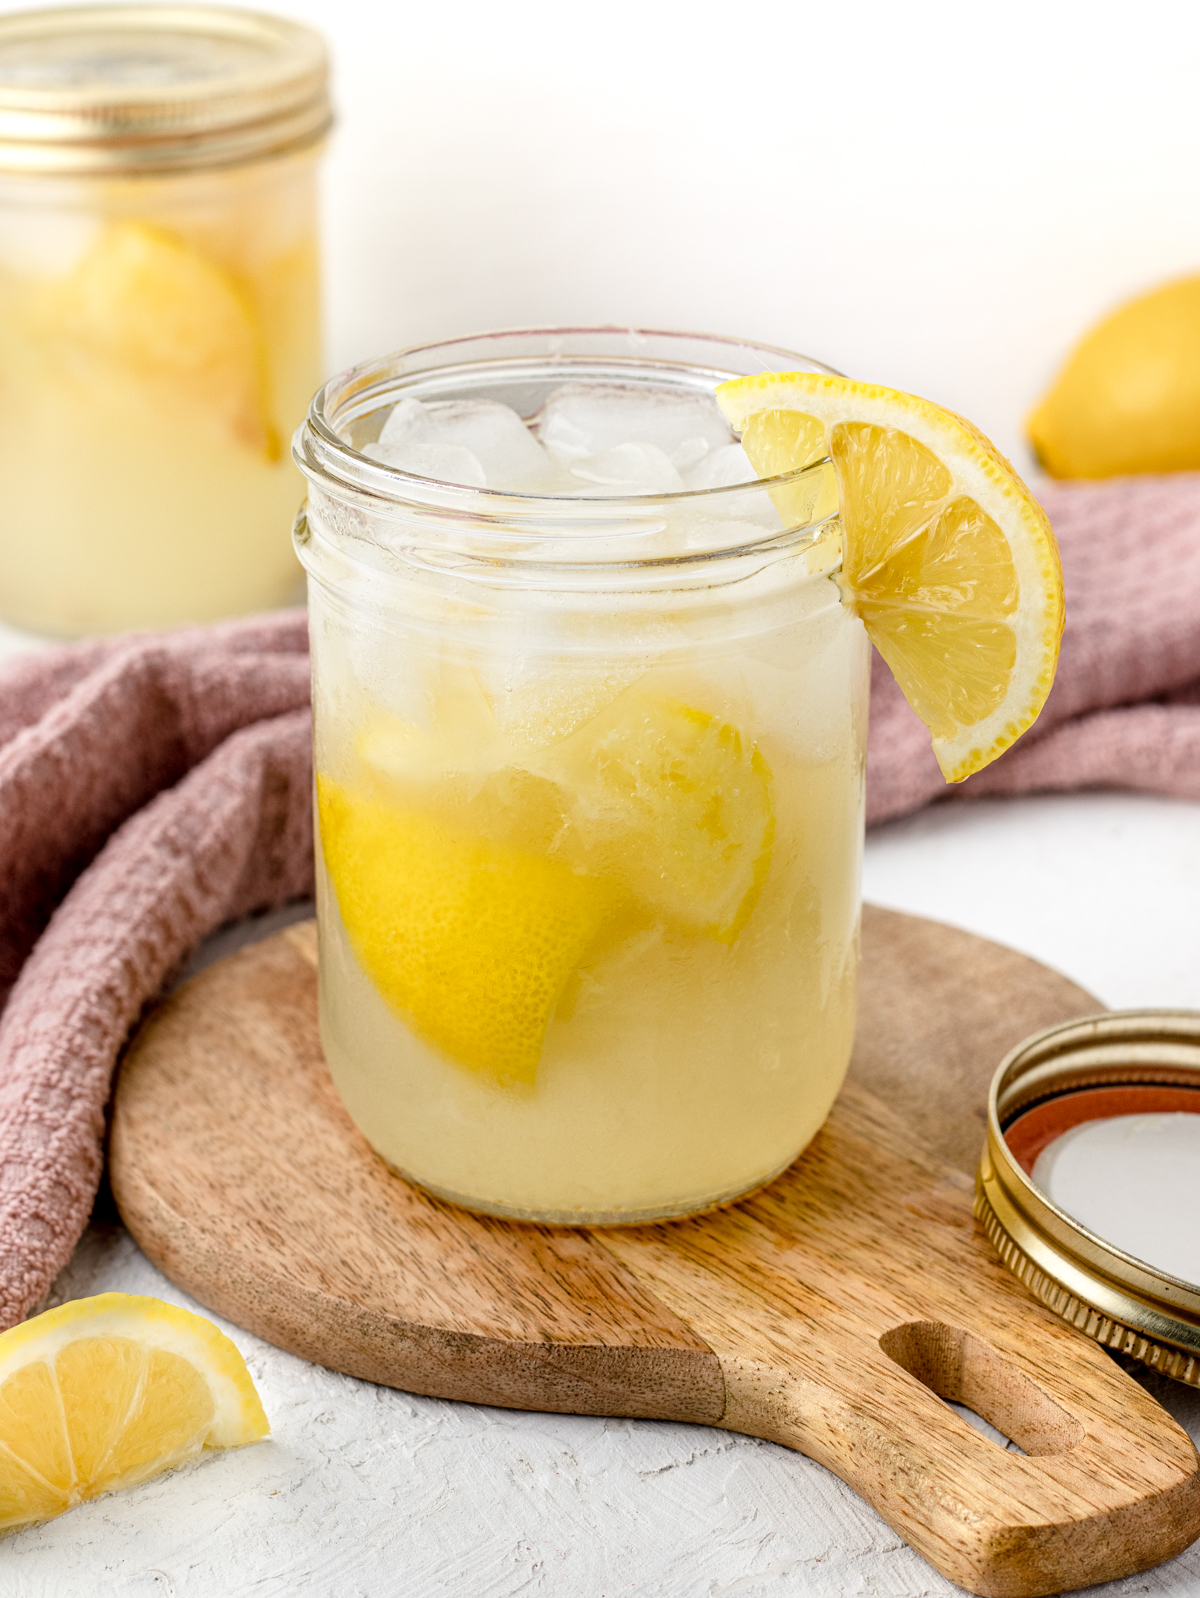 State Fair Lemonade with ice, lemons, and jar lid on the side.